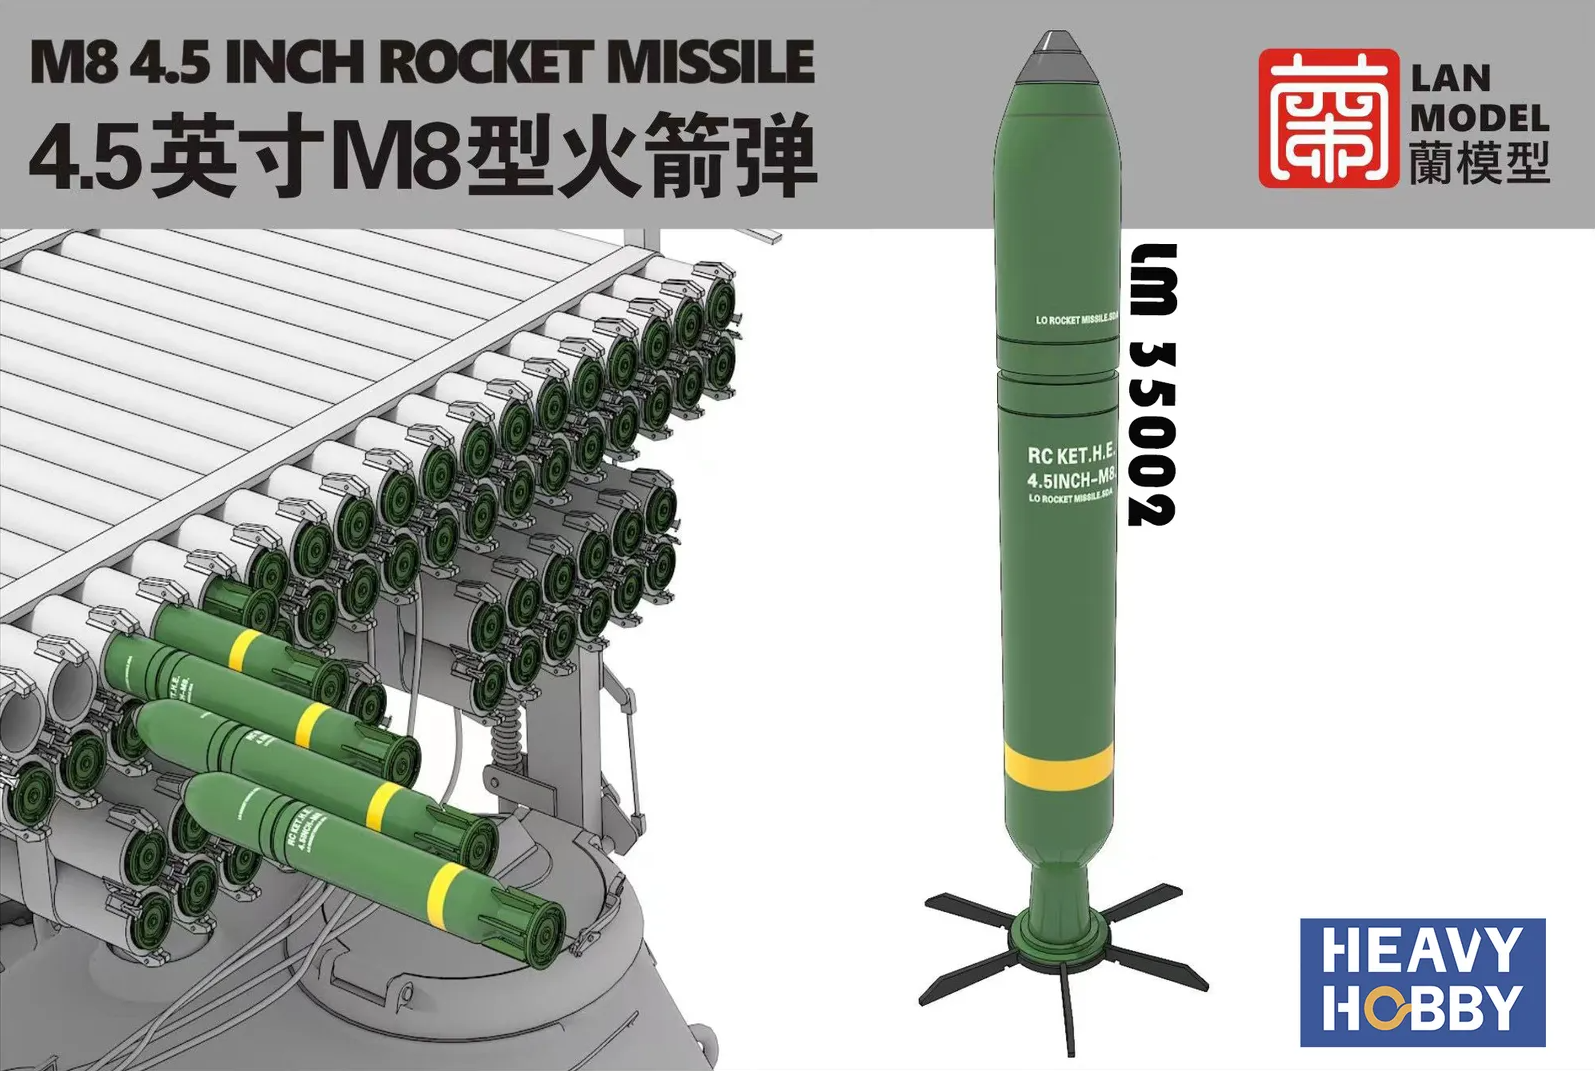 LM-35002  дополнения из металла  M8 4.5 inch rocket missile for 34 "Calliope"  (1:35)